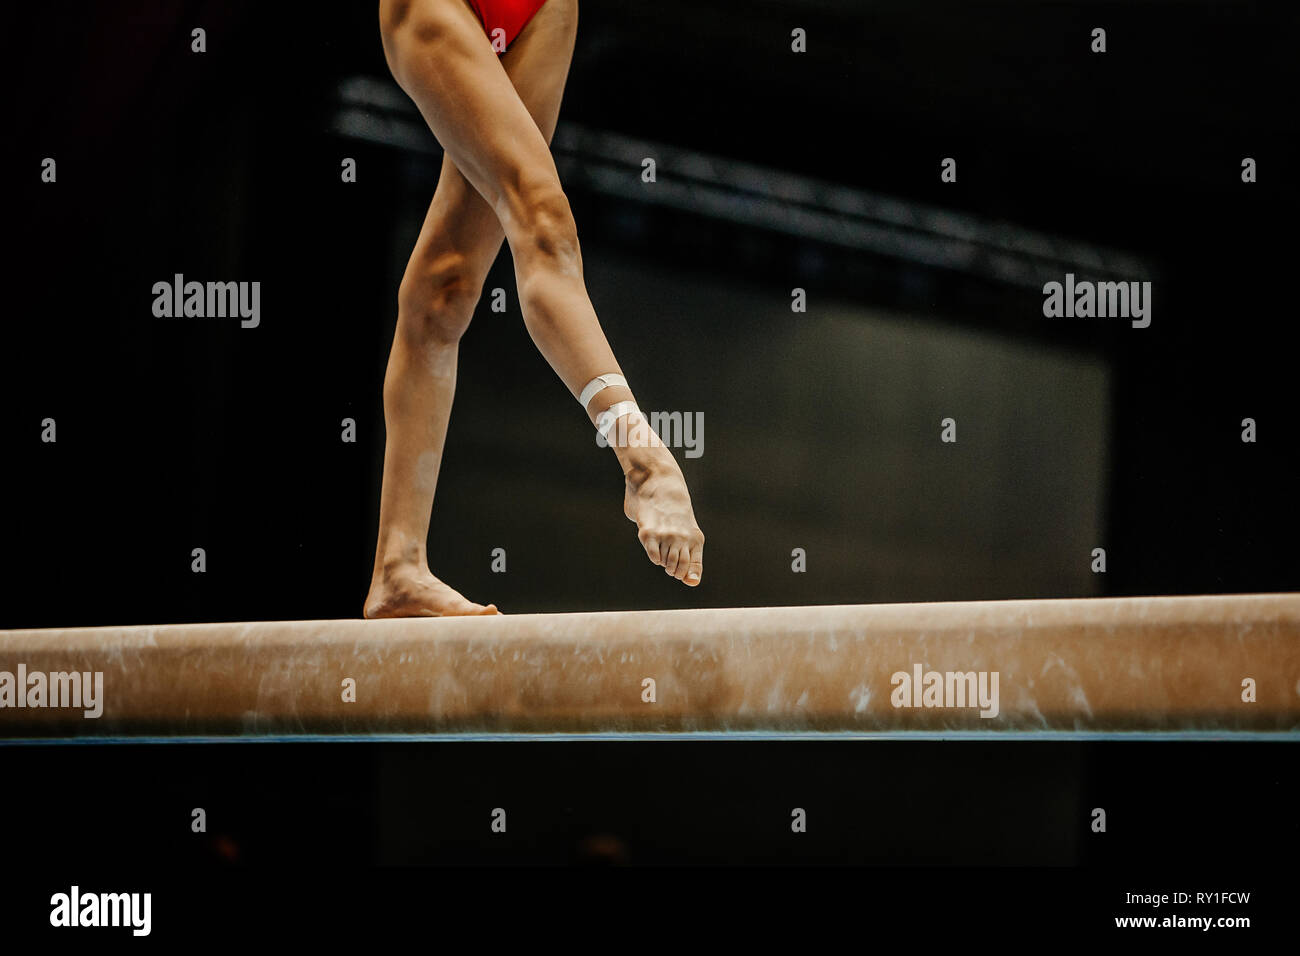 legs woman gymnast exercise balance beam in artistic gymnastics Stock Photo